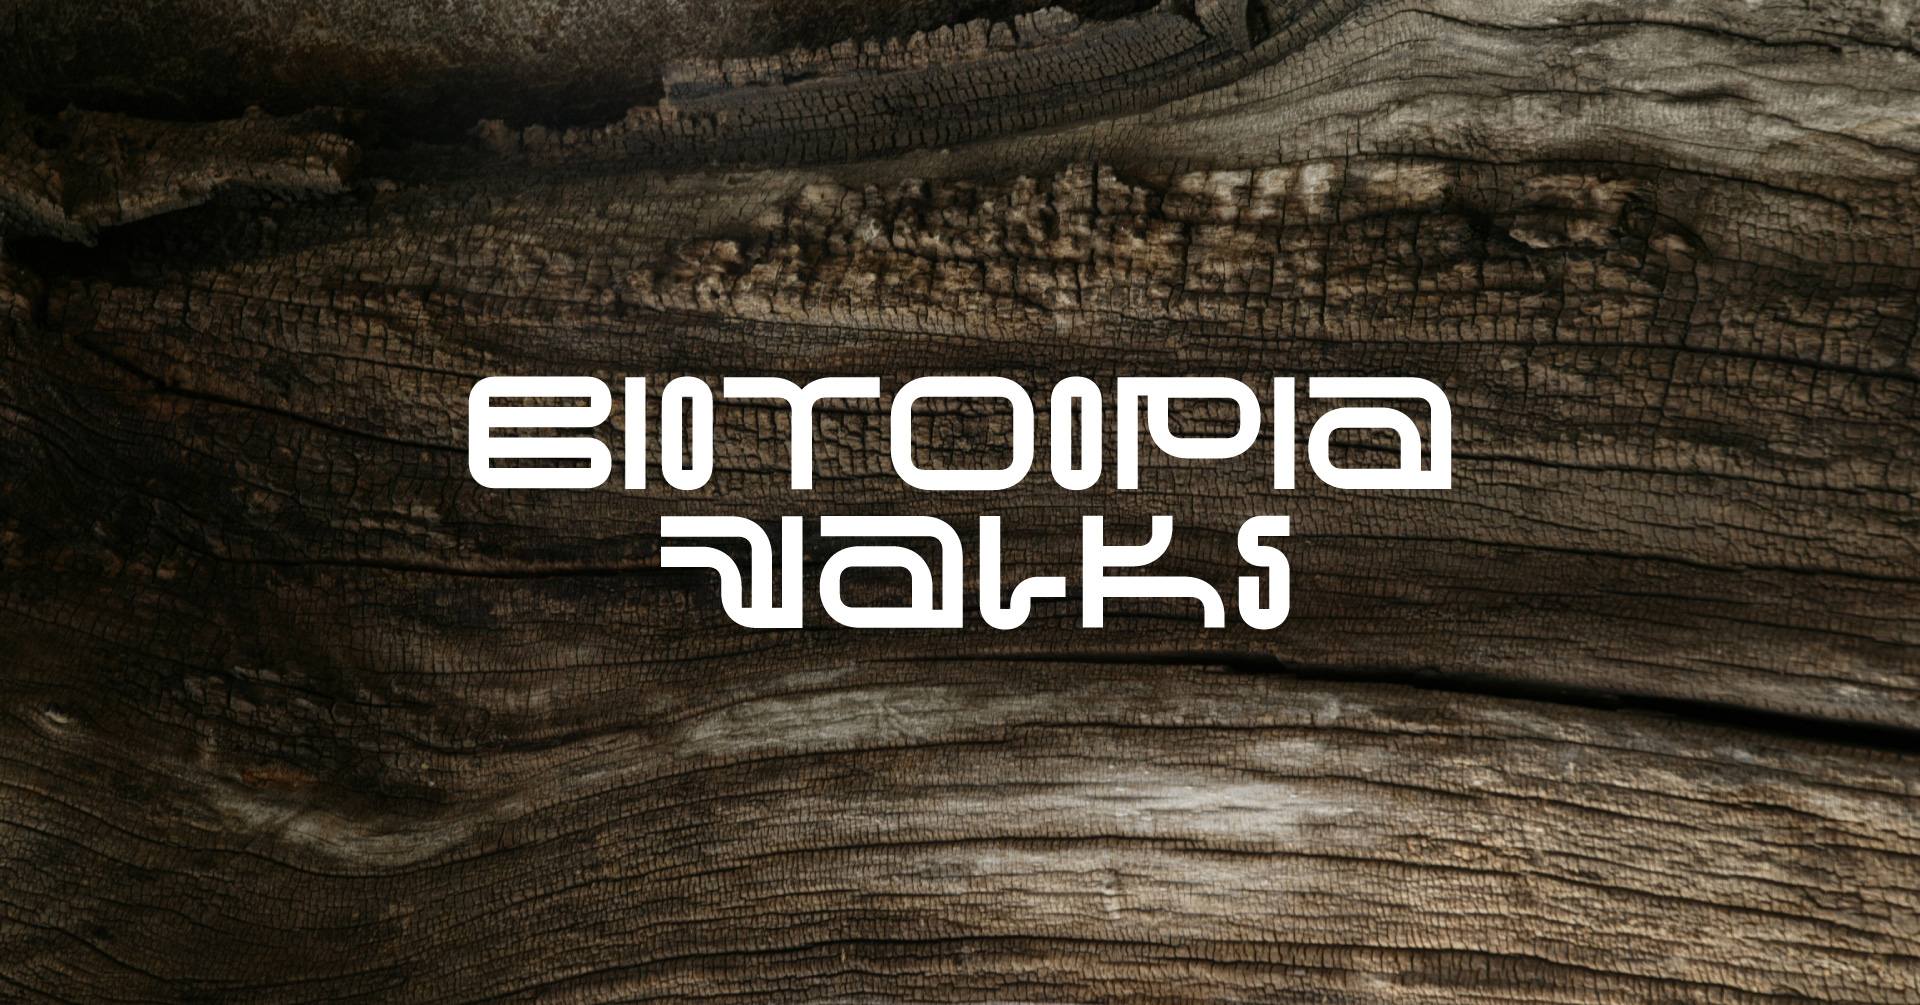 Biotoopia’22: Interspieces city